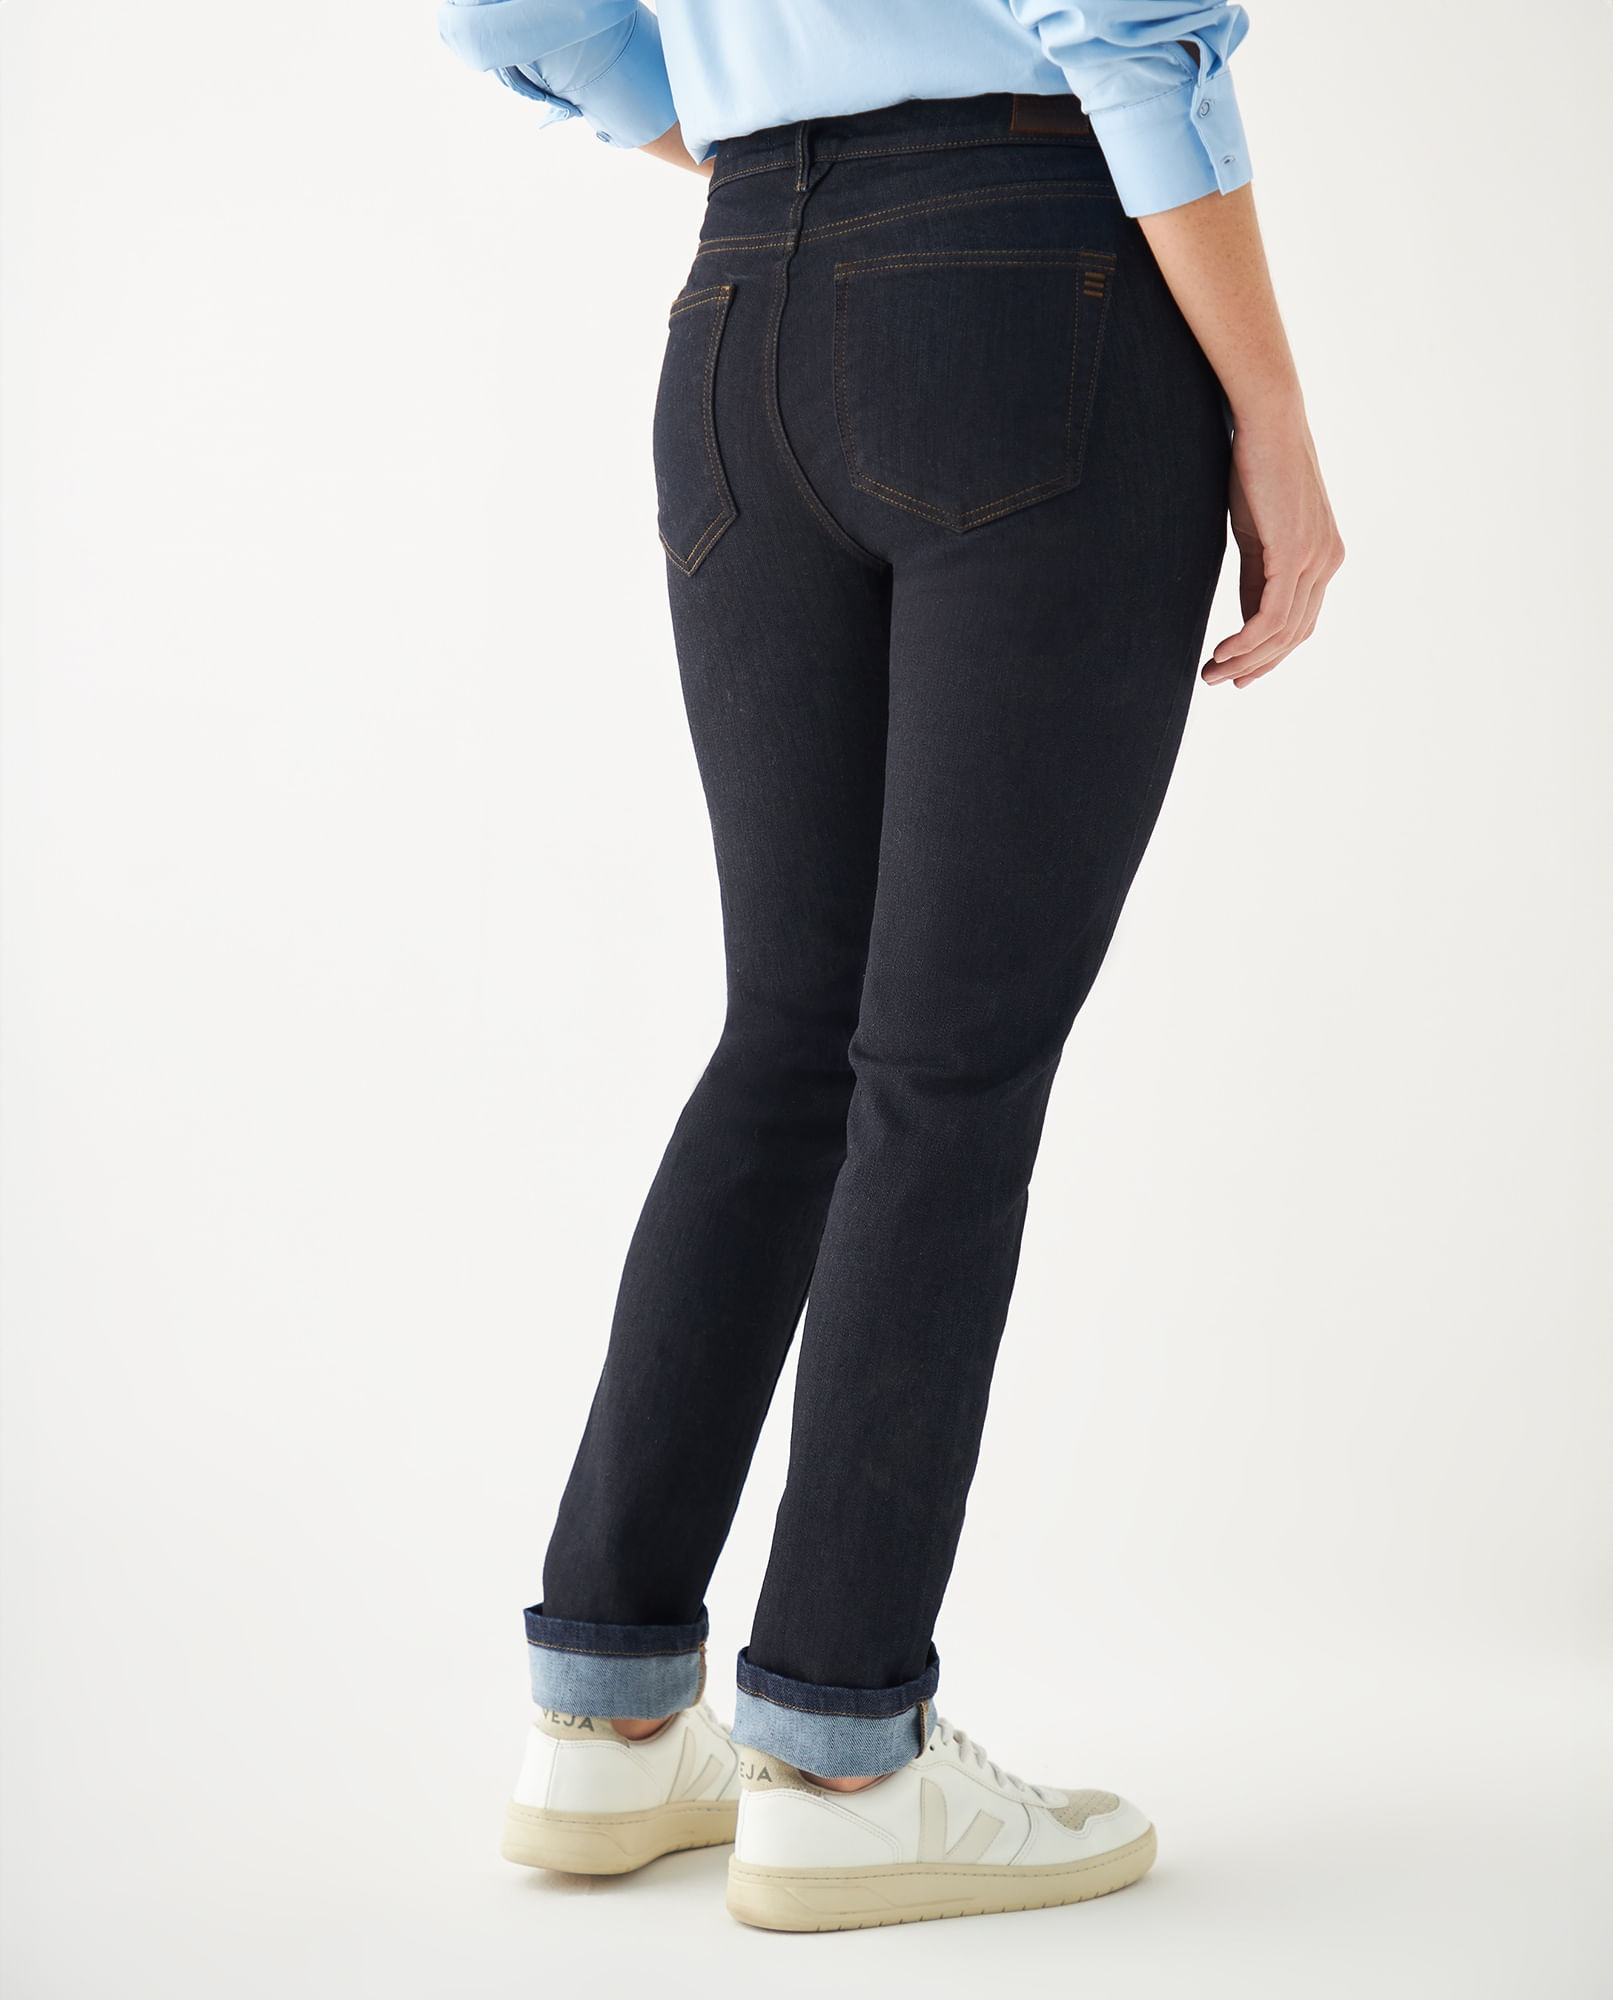  NP Mujer Jeans Cintura Slim Gris Denim Pantalones Burr Belt  Mujer Casual Pantalones, Azul oscuro : Ropa, Zapatos y Joyería